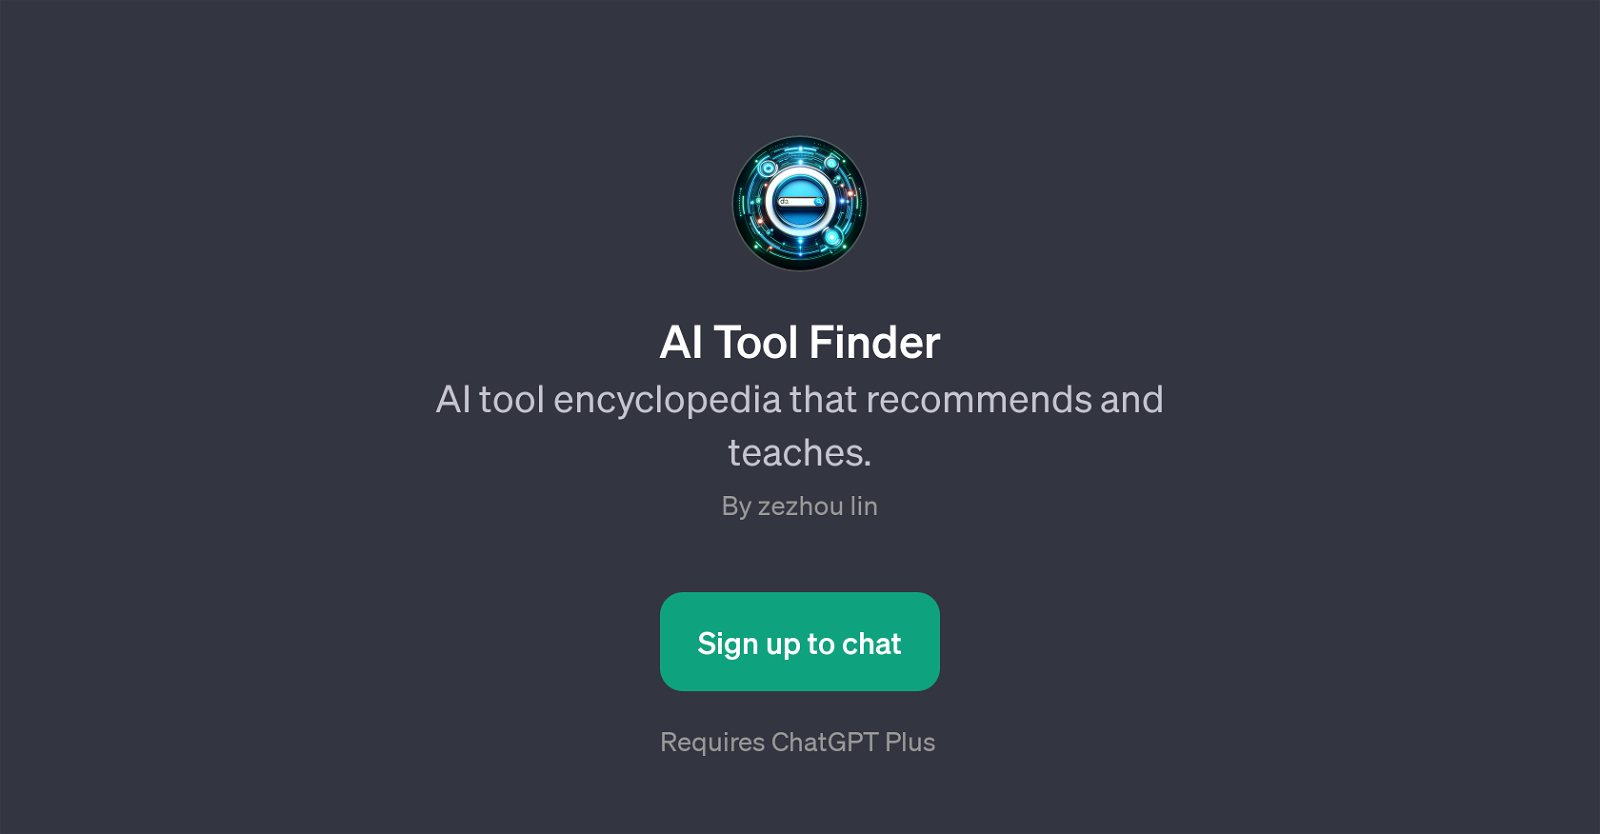 AI Tool Finder website